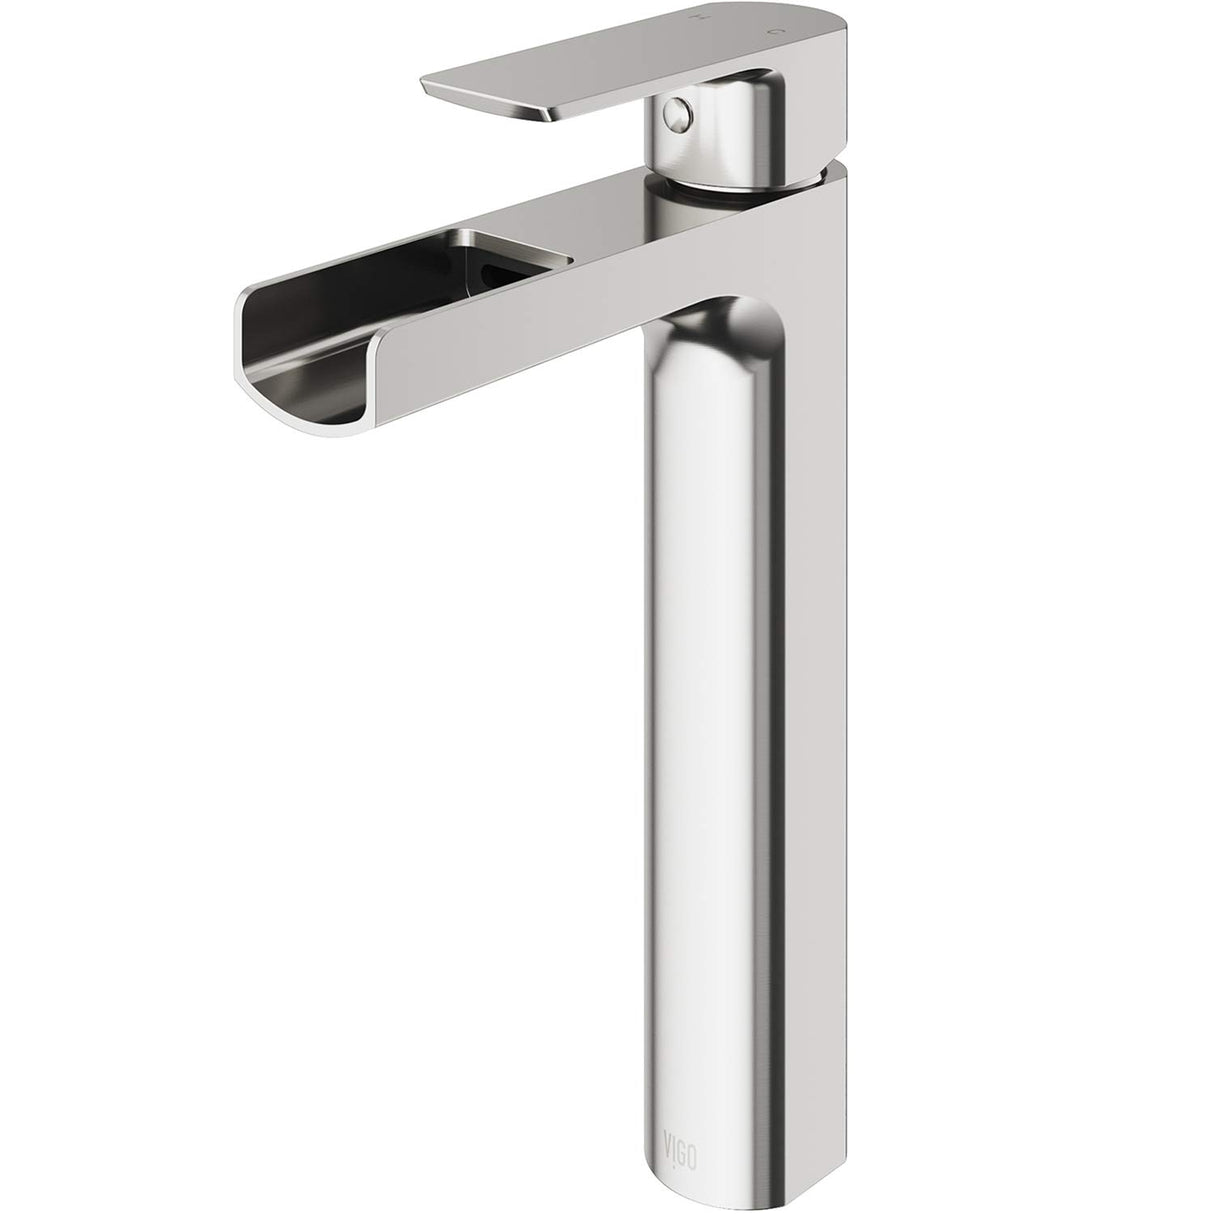 VIGO Amada 10.375 inch H Single Hole Single Handle Bathroom Faucet in Brushed Nickel - Vessel Sink Faucet VG03026BN